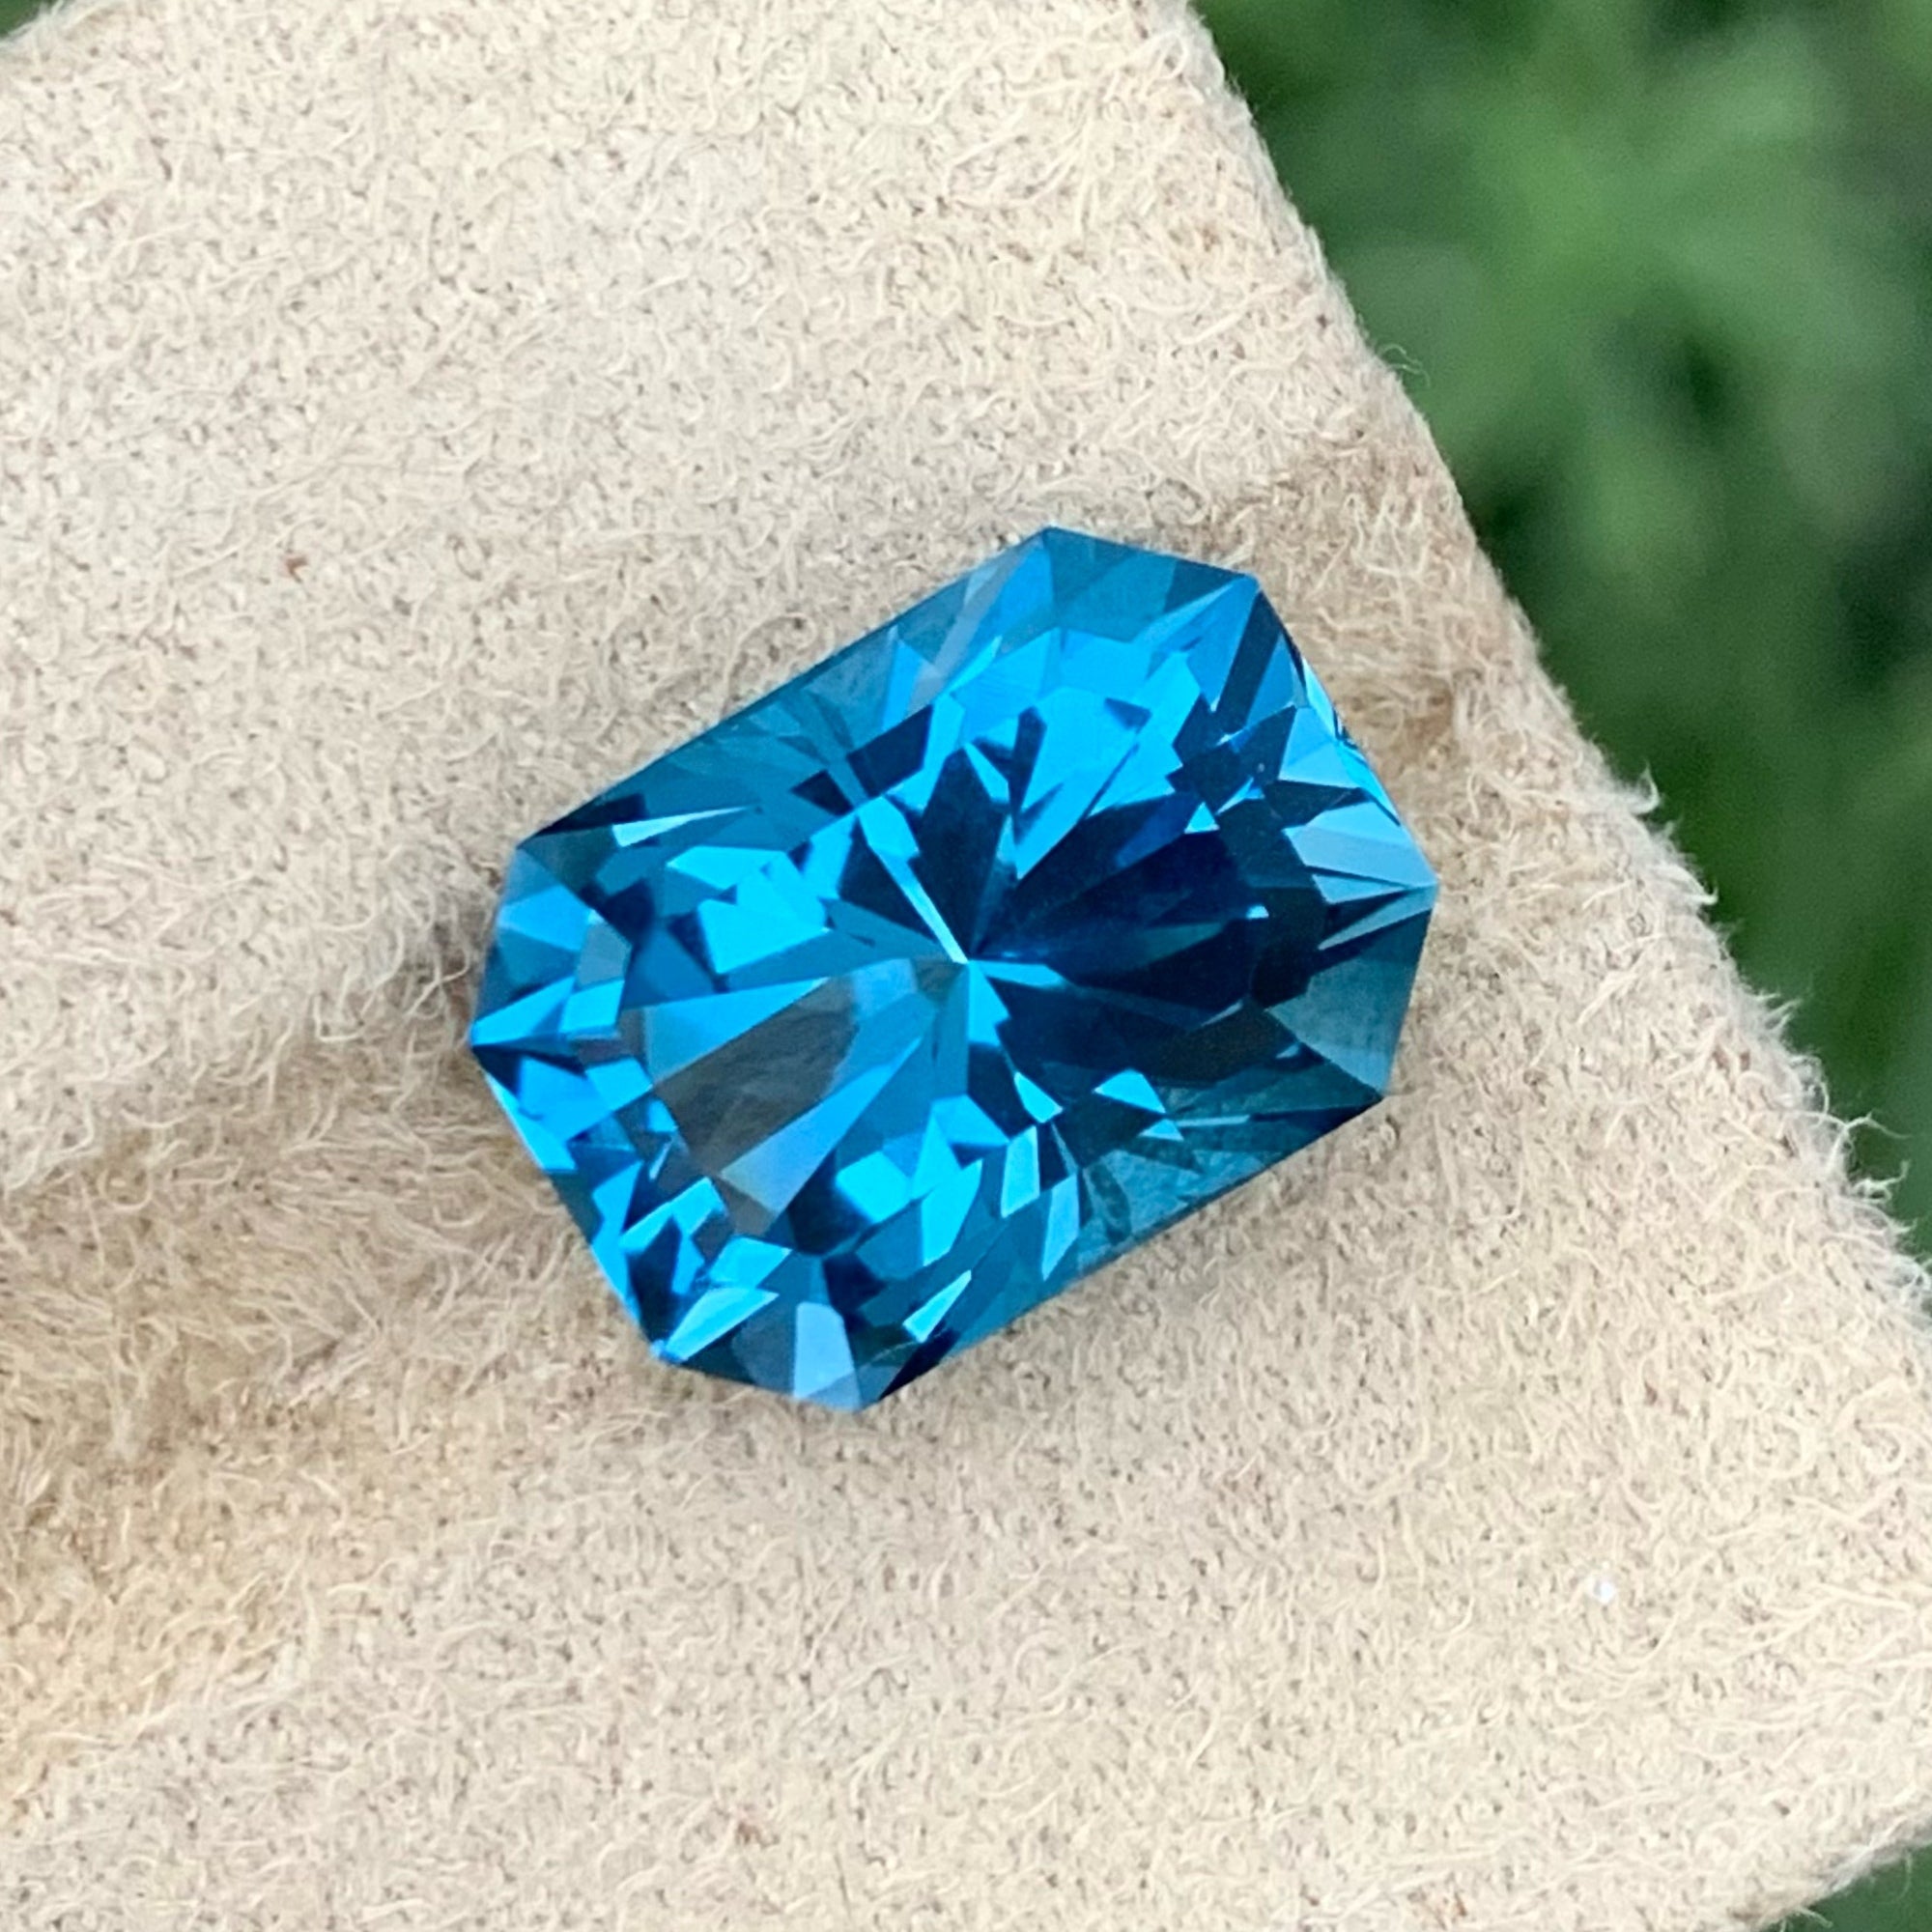 Exquisite London Blue Topaz Gemstone